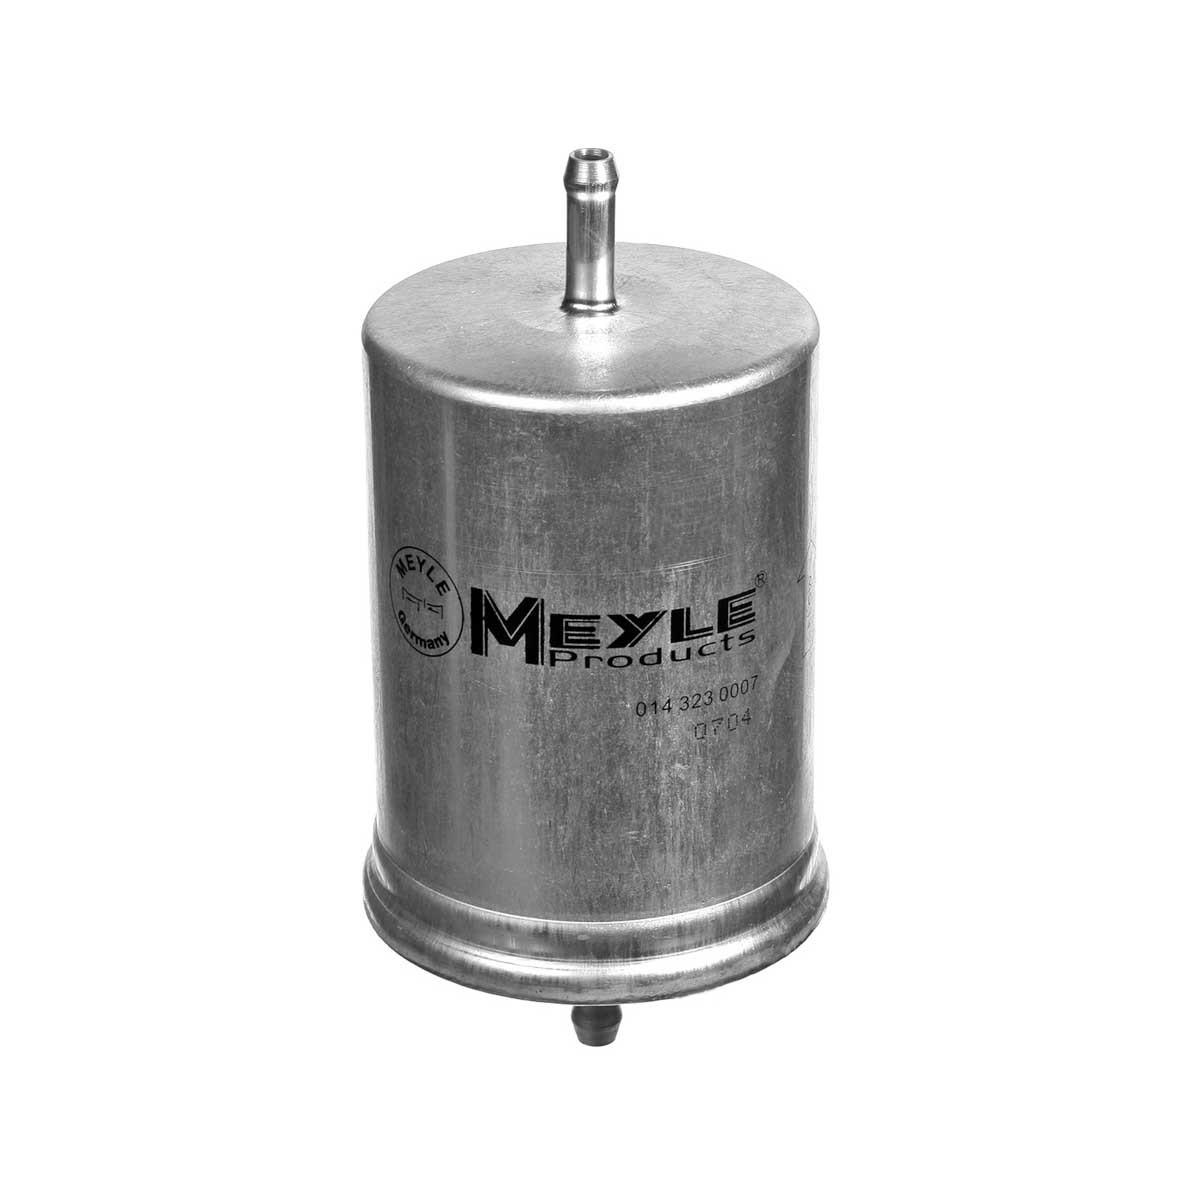 MEYLE 014 323 0007 Fuel filter In-Line Filter, ORIGINAL Quality